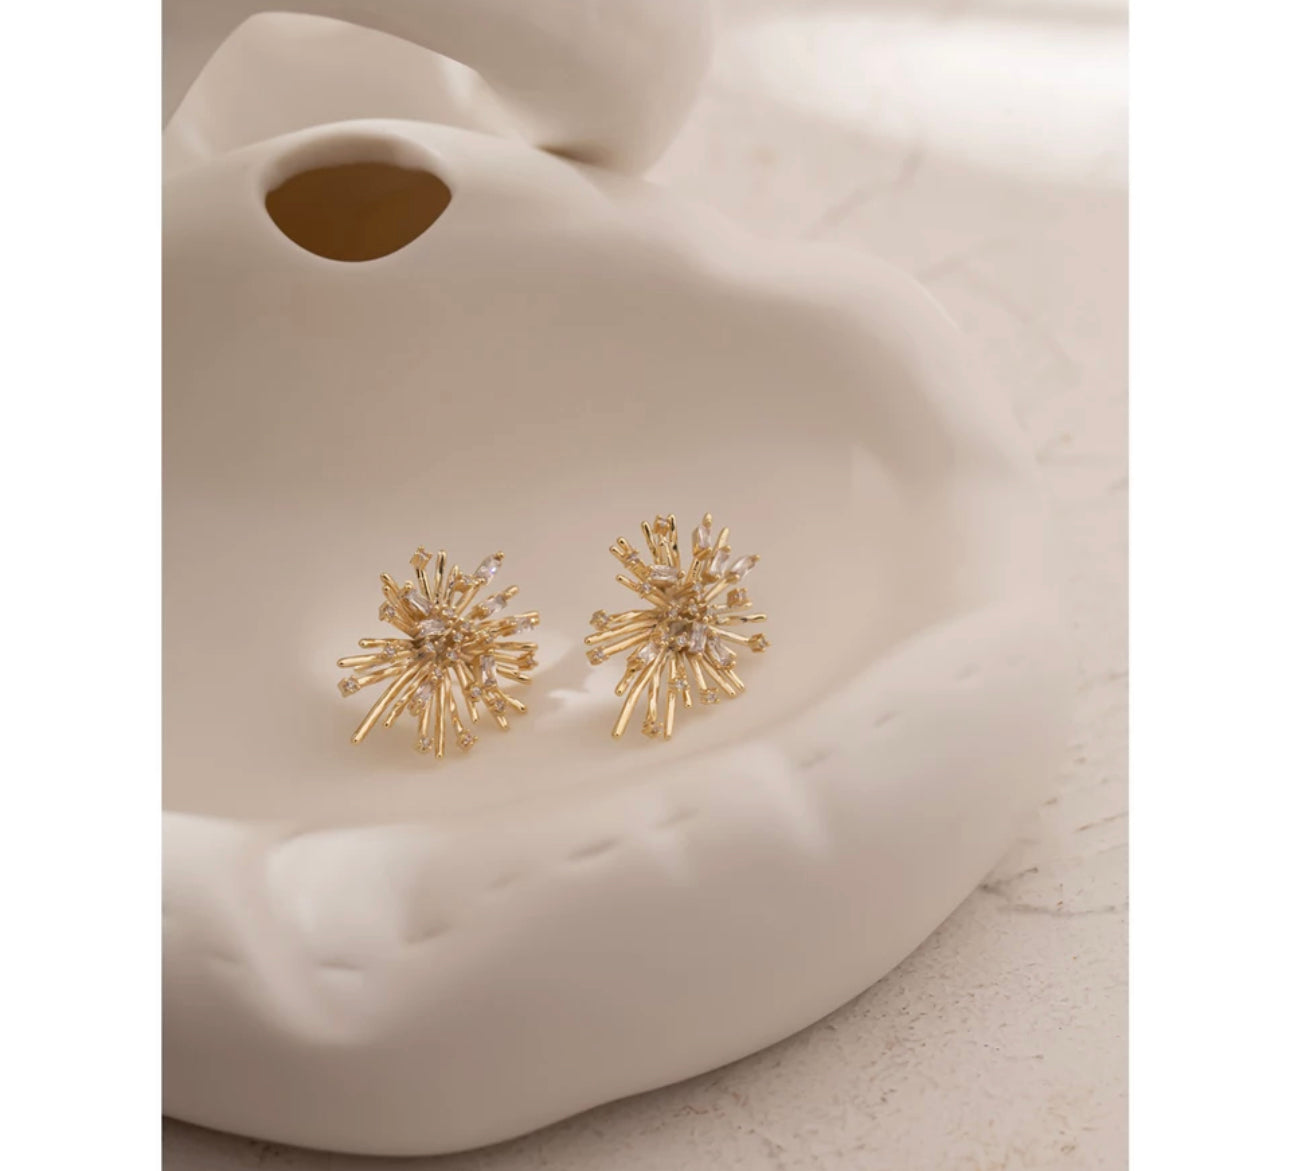 Erika Williner Designs - Stardust earrings